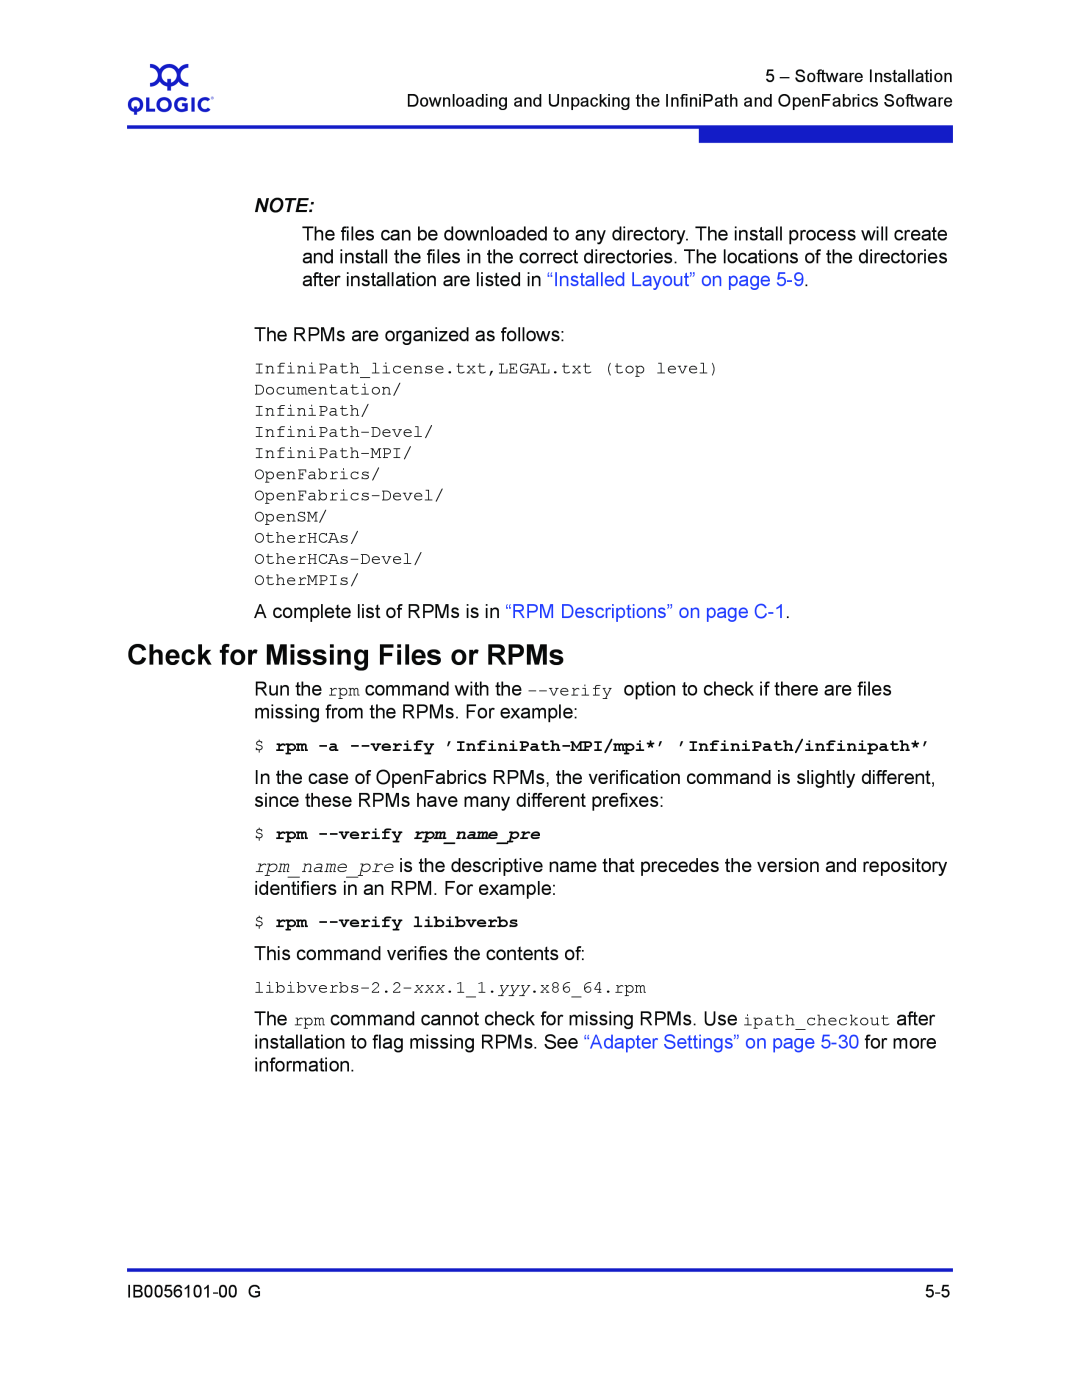 Q-Logic IB0056101-00 G manual Check for Missing Files or RPMs 